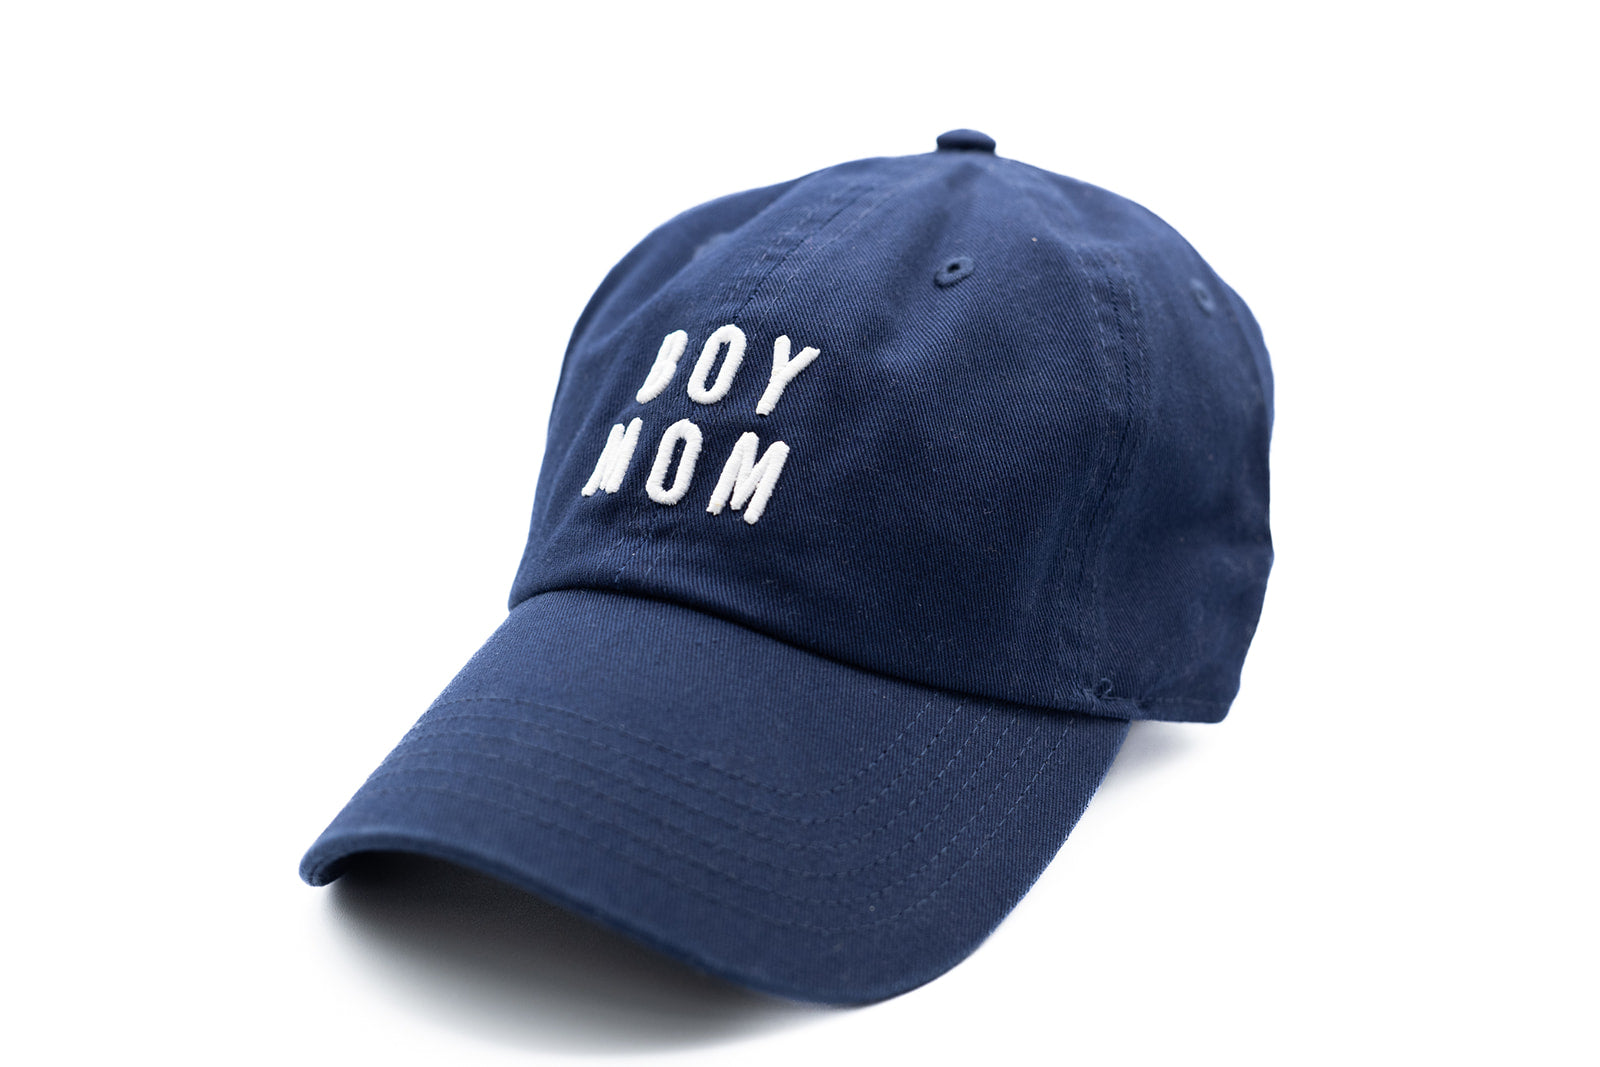 Navy Boy Mom Hat